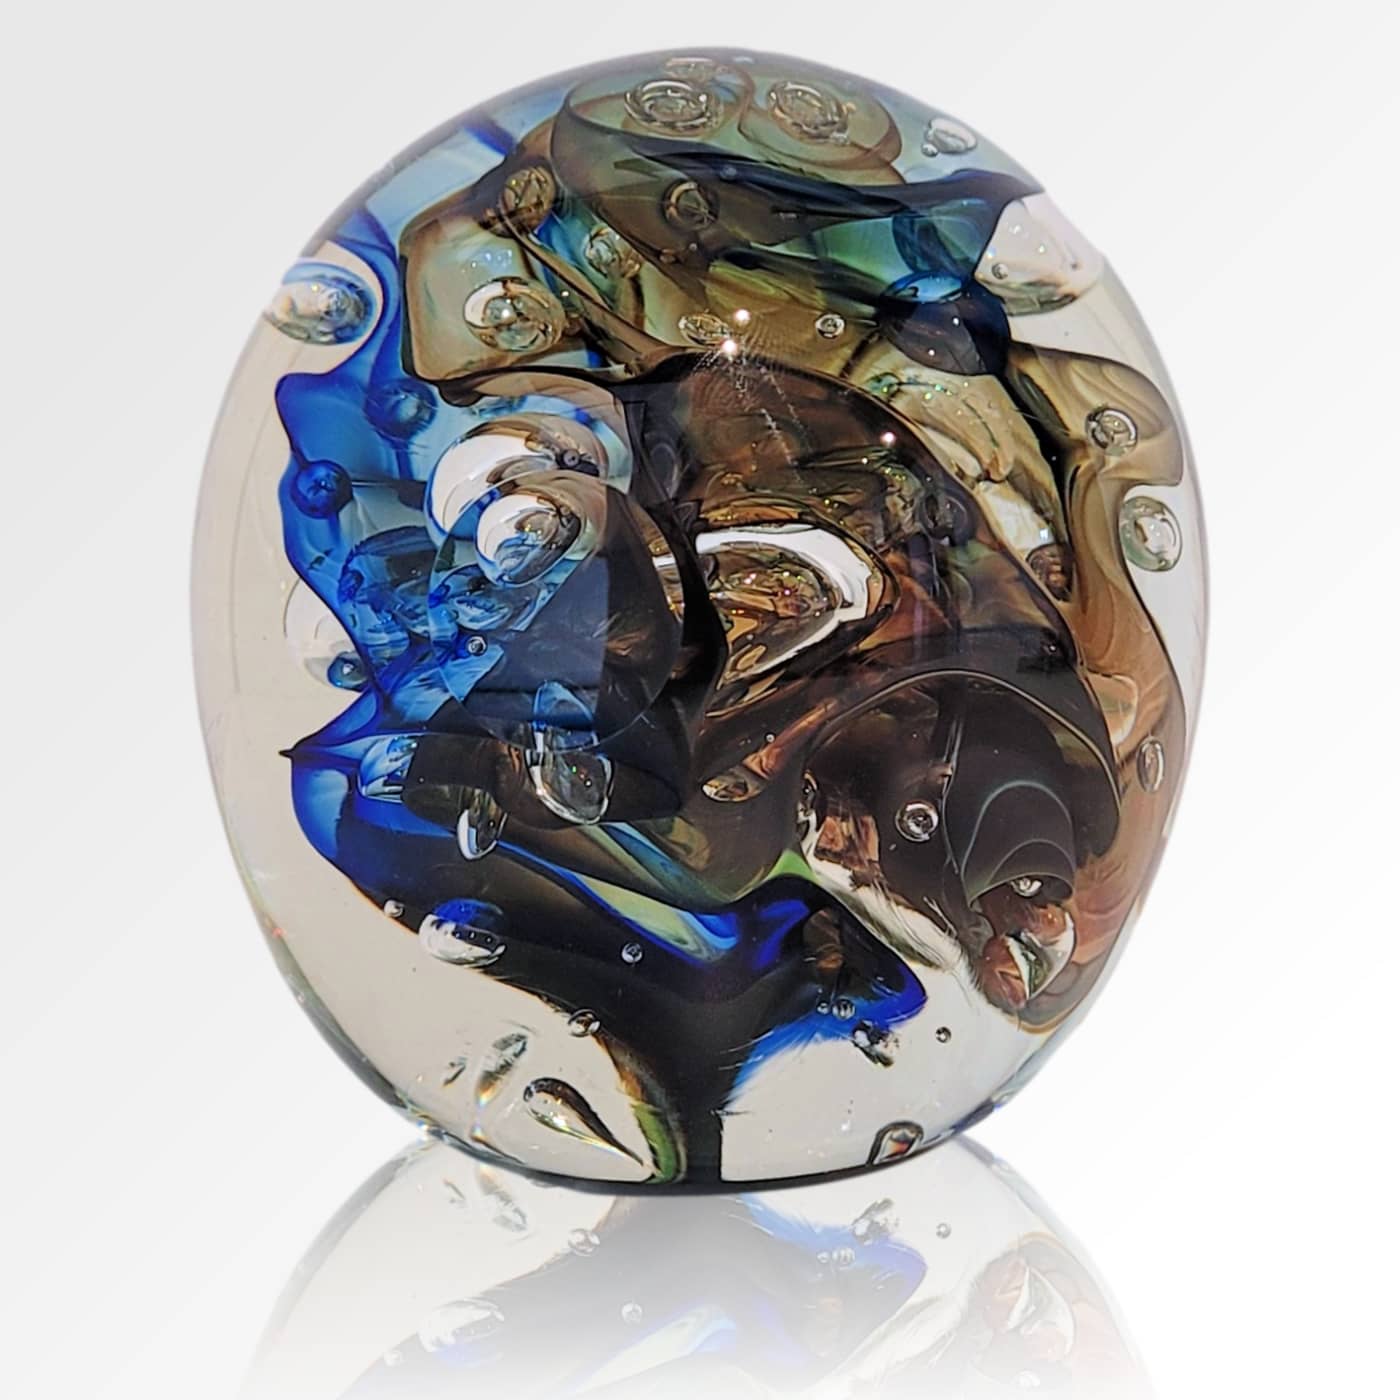 Peninsula-Based Australian Glass Artist Roberta Easton ~ 'Bubbly Sphere, Rockpool' - Curate Art & Design Gallery Sorrento Mornington Peninsula Melbourne